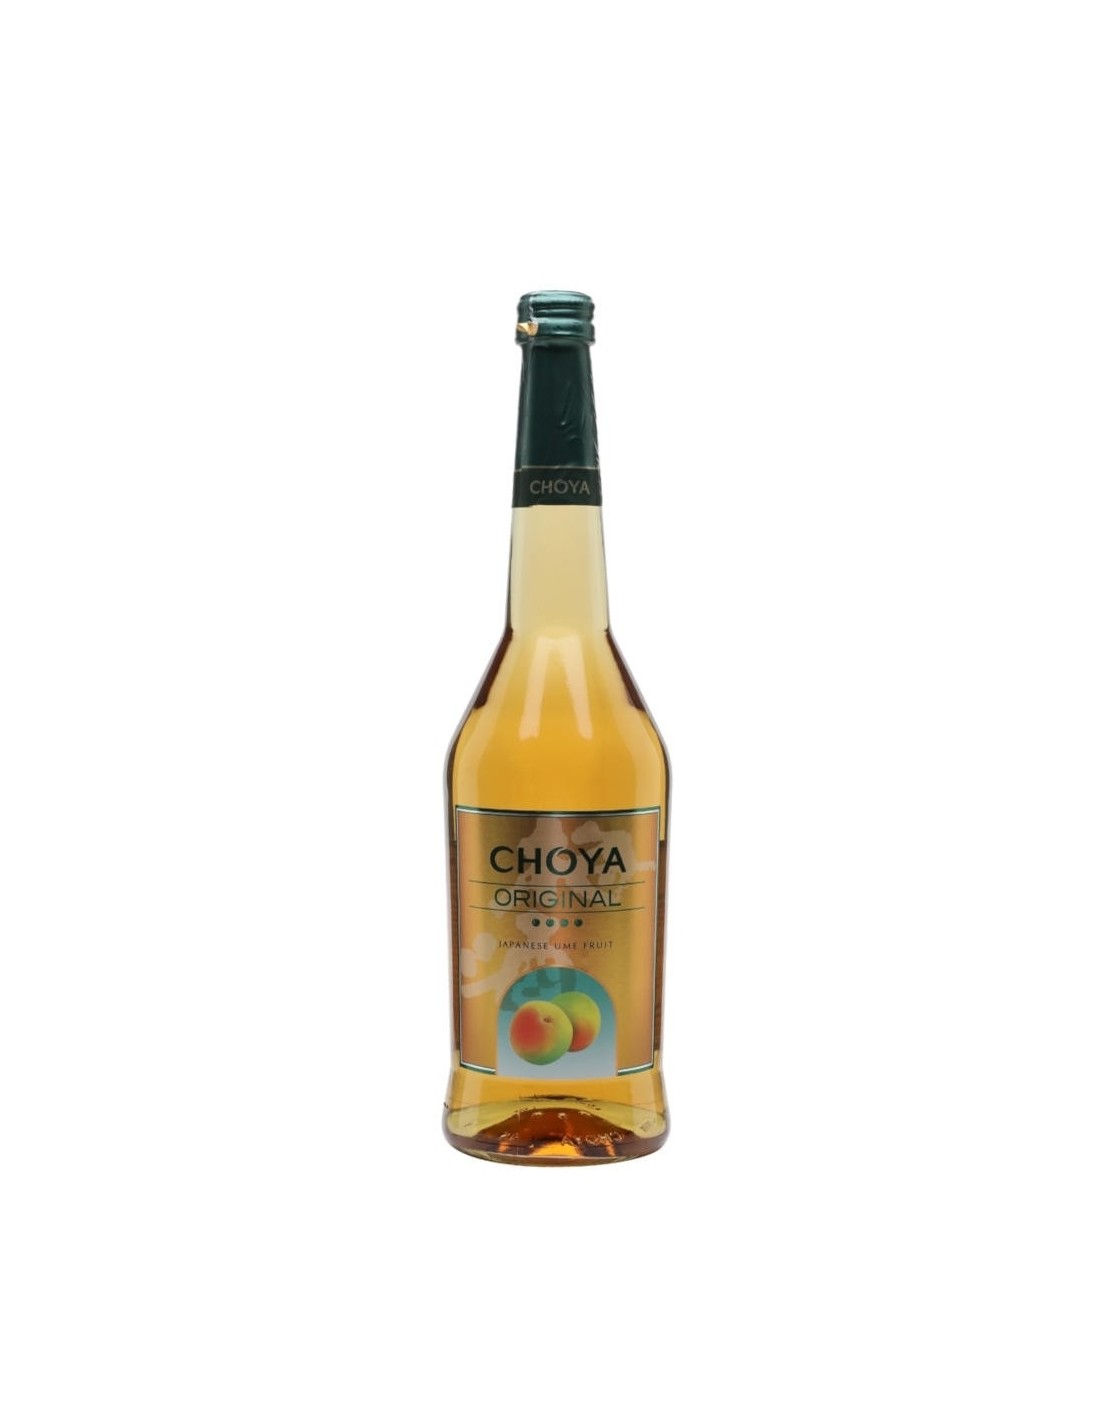 Bautura traditionala vin de prune Choya, 10% alc., 0.75L, Japonia alcooldiscount.ro